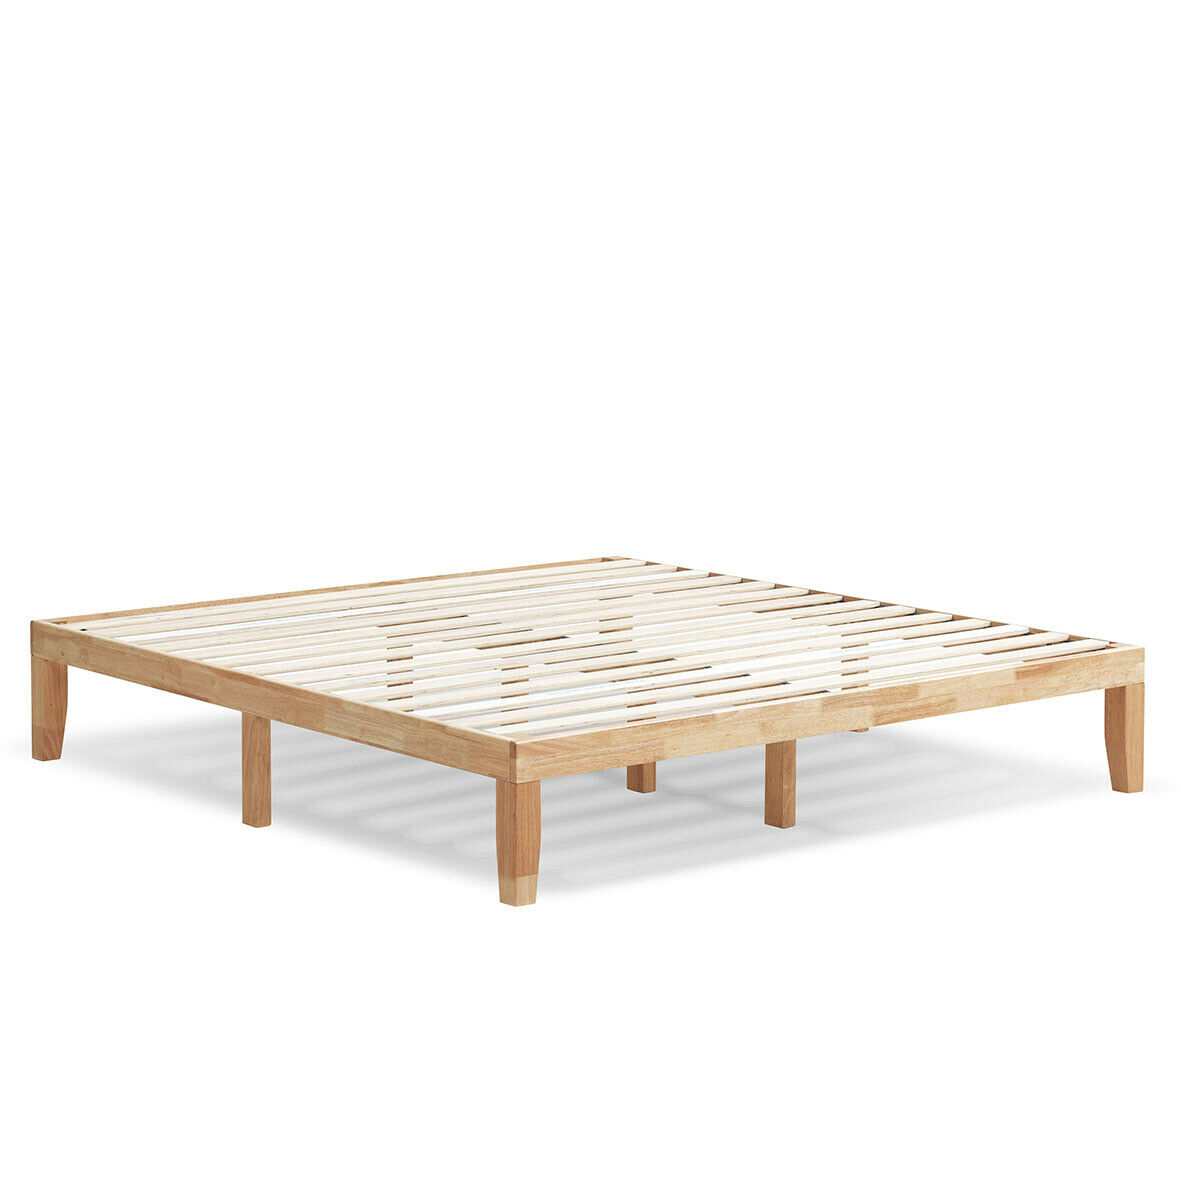 Gymax King Size 14 Wooden Bed Frame, King Bed Wood Slats